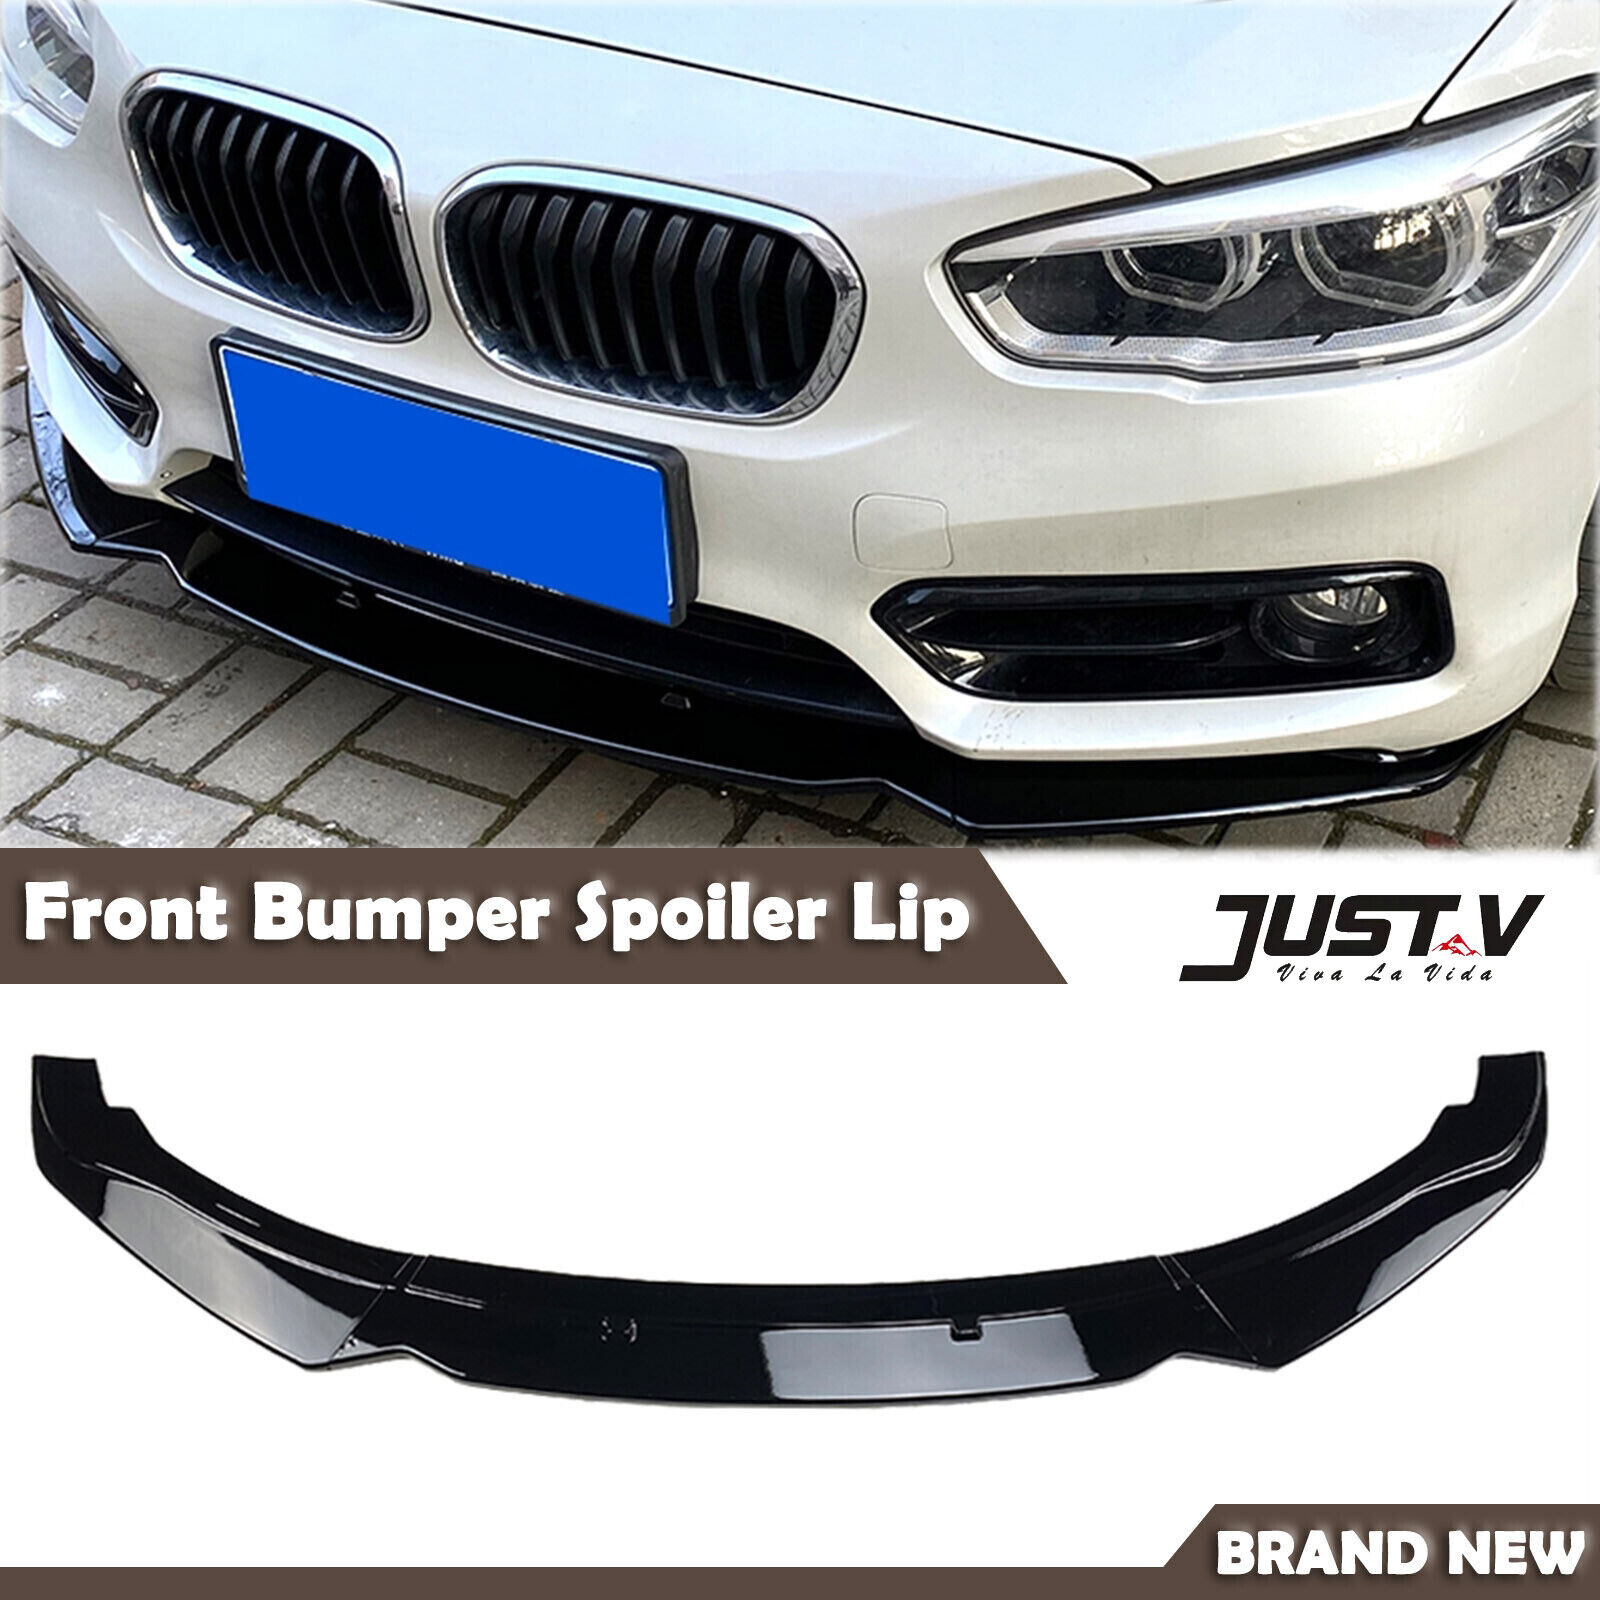 JustV Front Bumper Spoiler Lip For BMW 1 Series F20 F21 116i 118i 120i 2015-2019